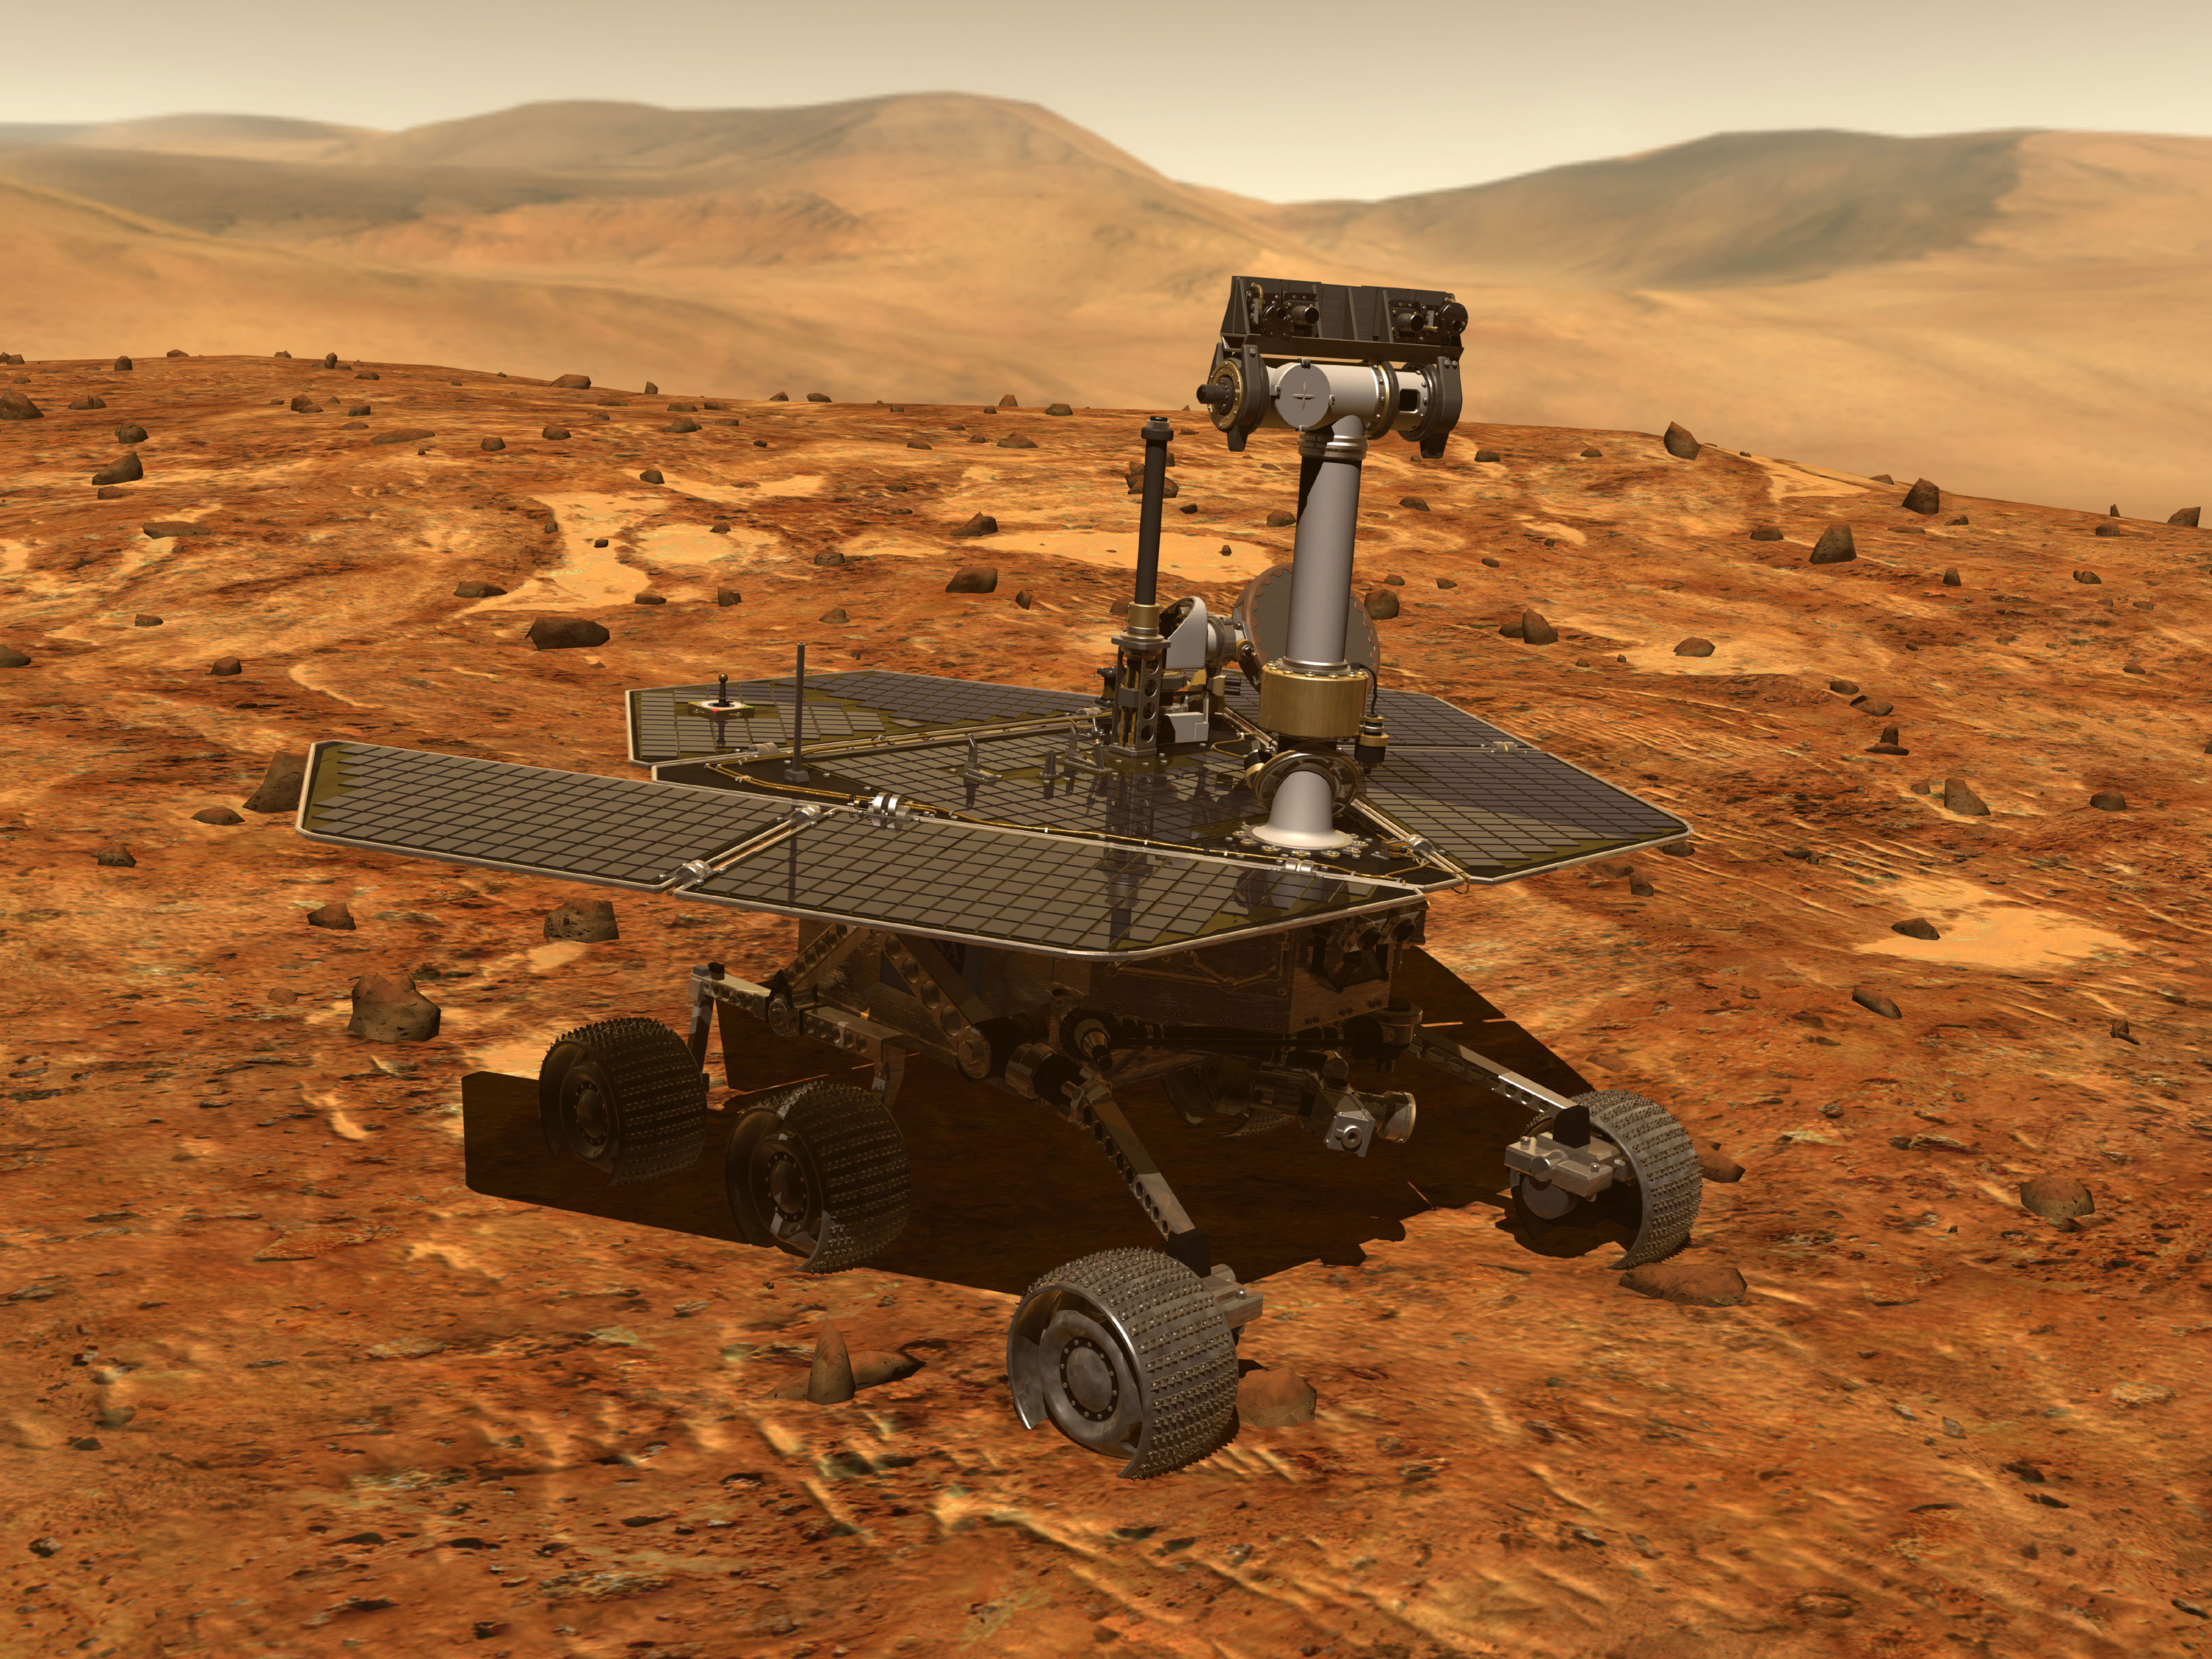 The Mars Spirit vehicle. Image: NASA